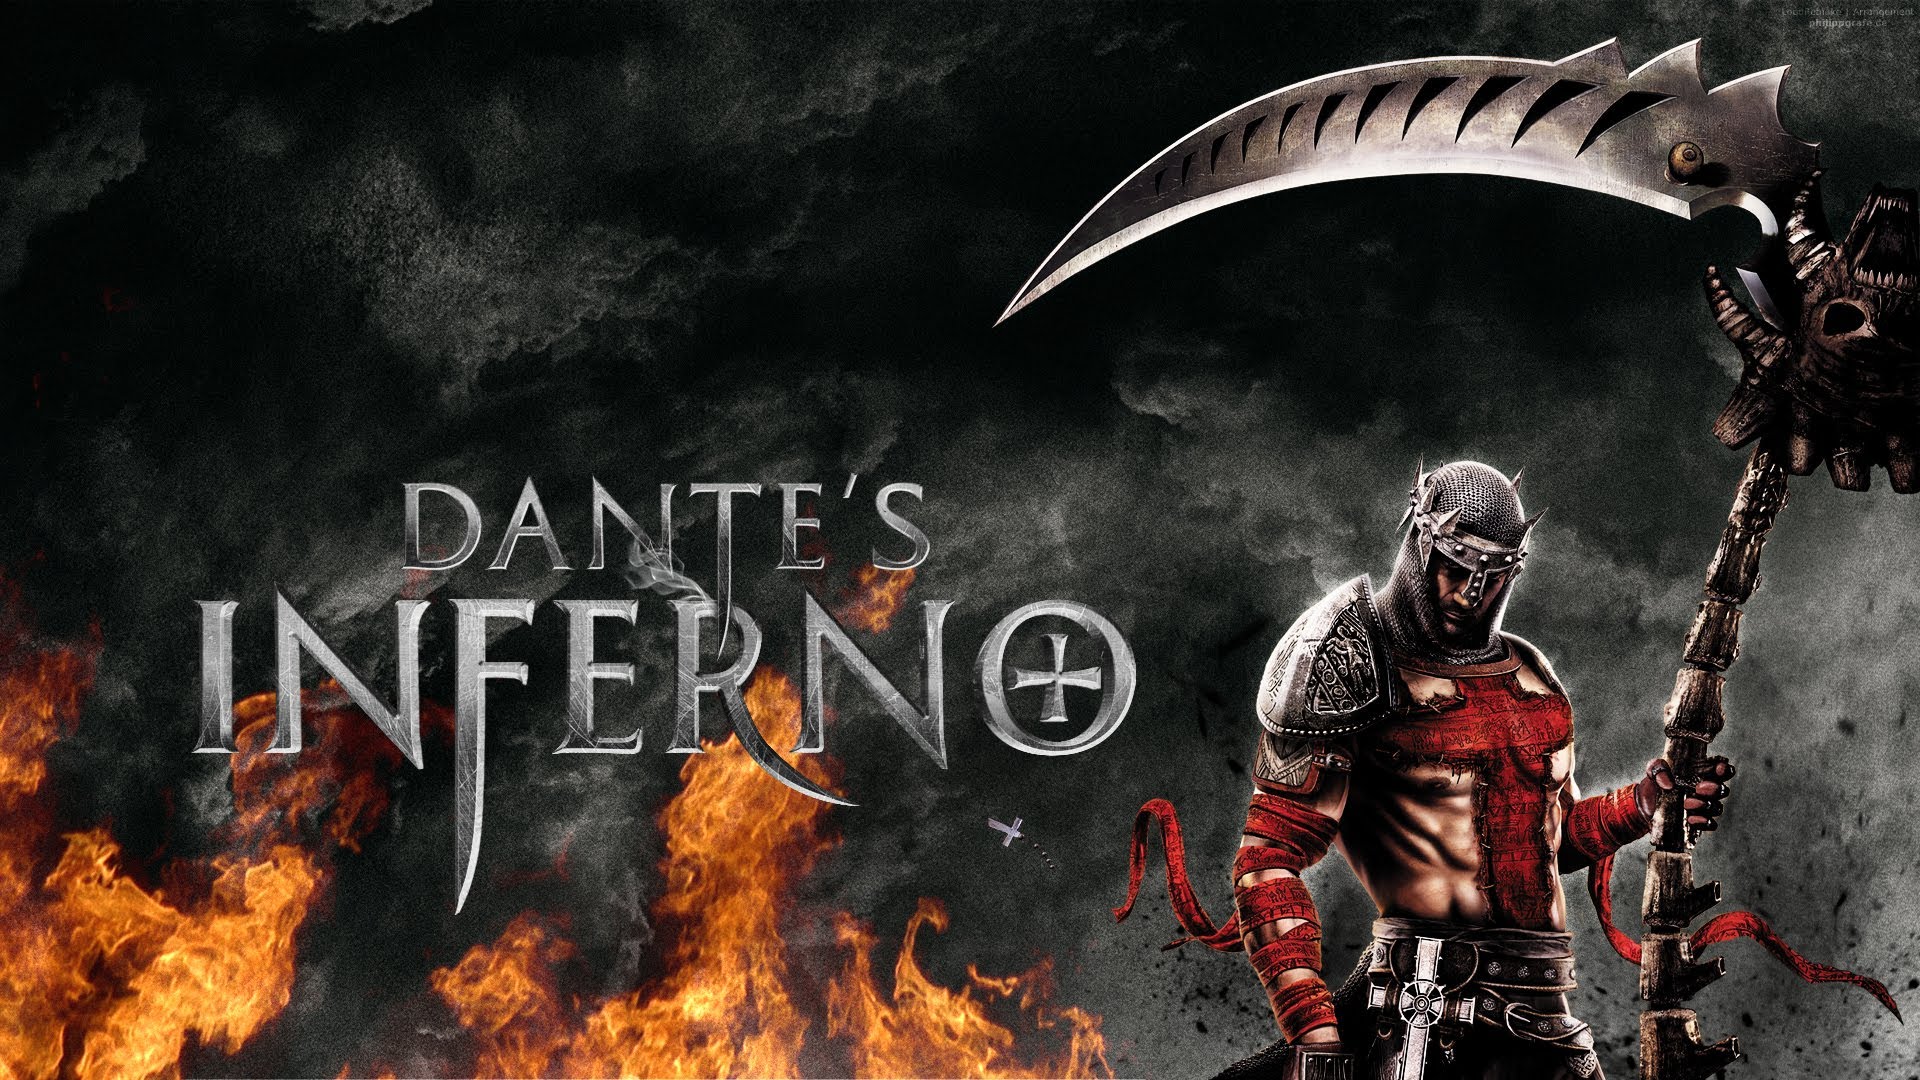 Dante's Inferno PC Gameplay - RPCS3 Emulator + Settings (100% Playable)  2021 Updated Performance! 